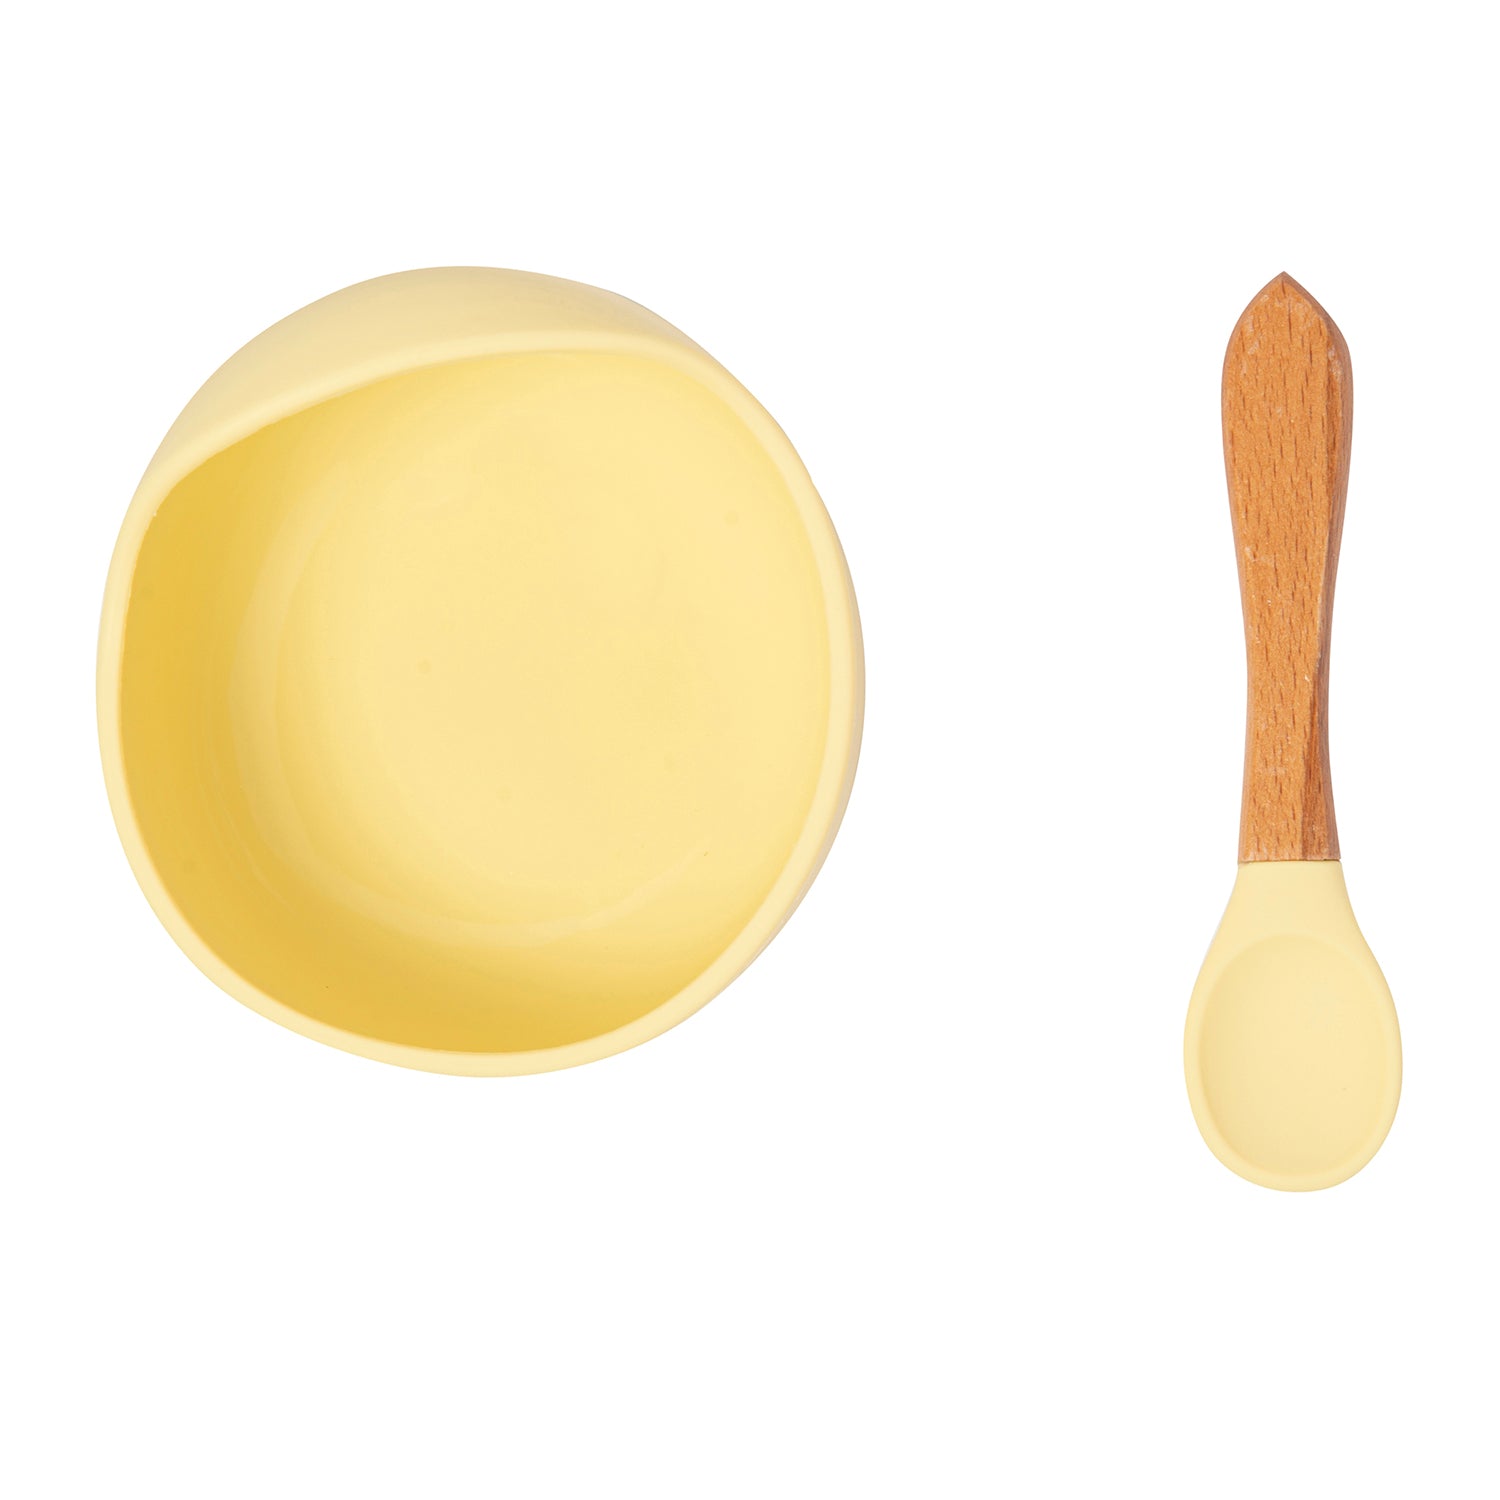 Yellow Silicon Bowl And Spoon Set